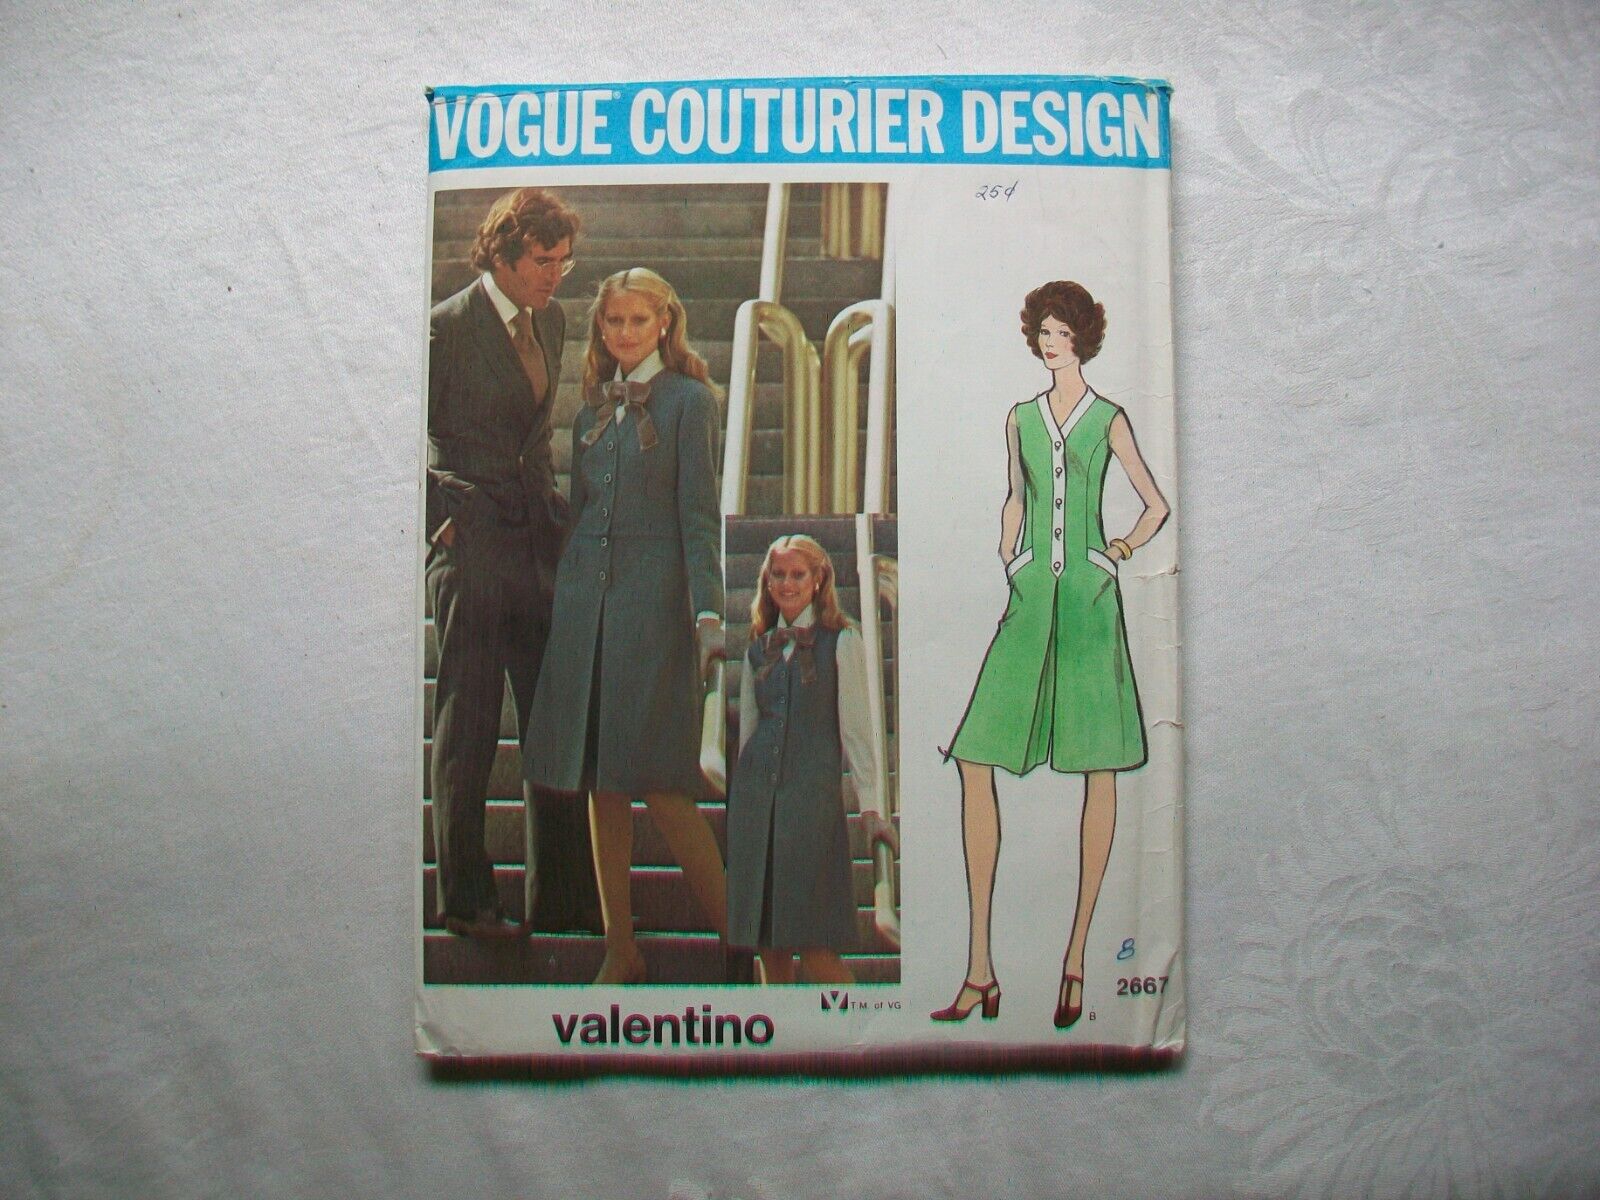 Vogue Couturier Design Valentino Pattern Dress Jacket Blouse #2667 sz 8 vintage